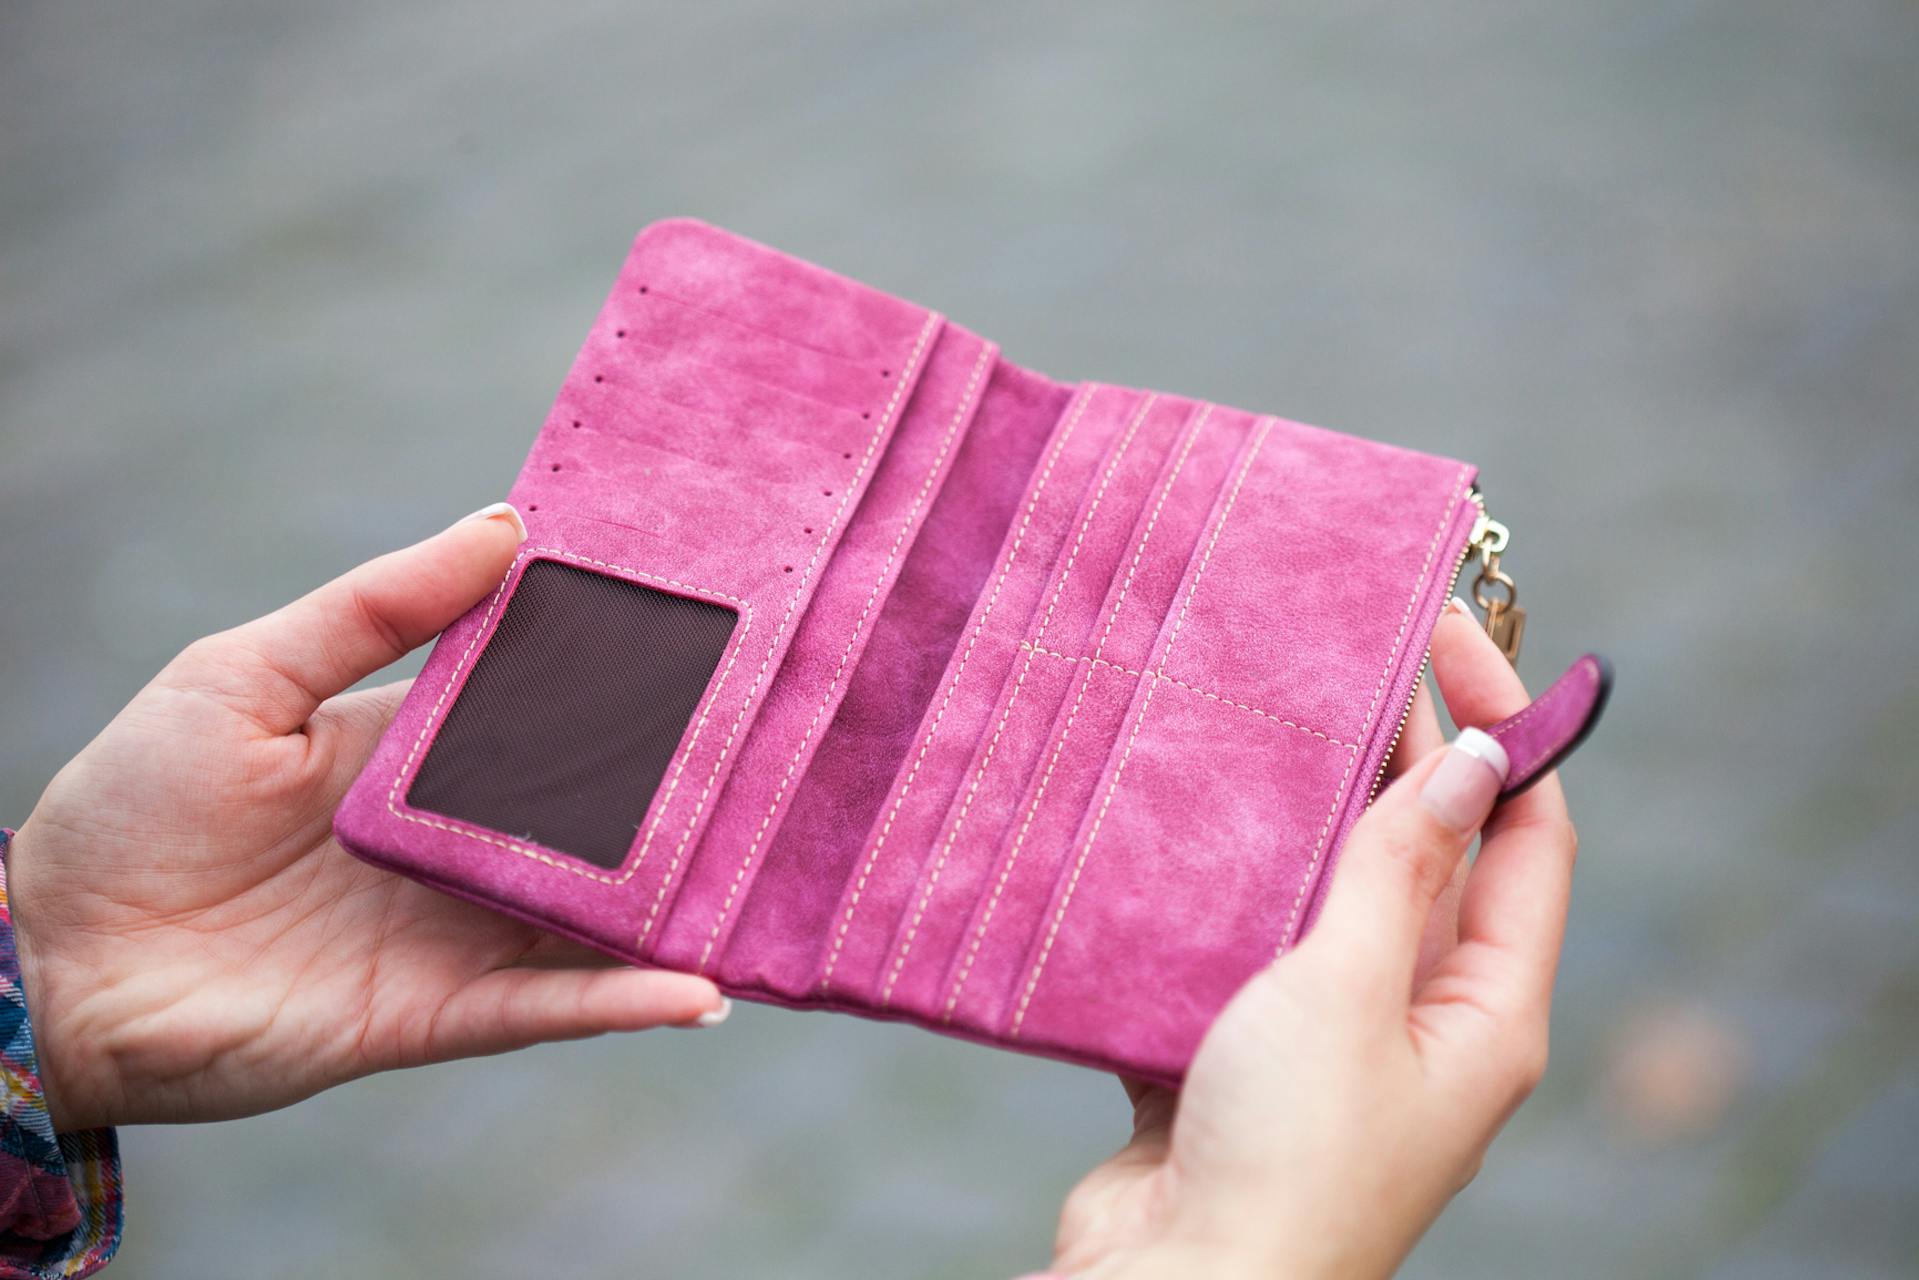 A pink wallet | Source: Pexels